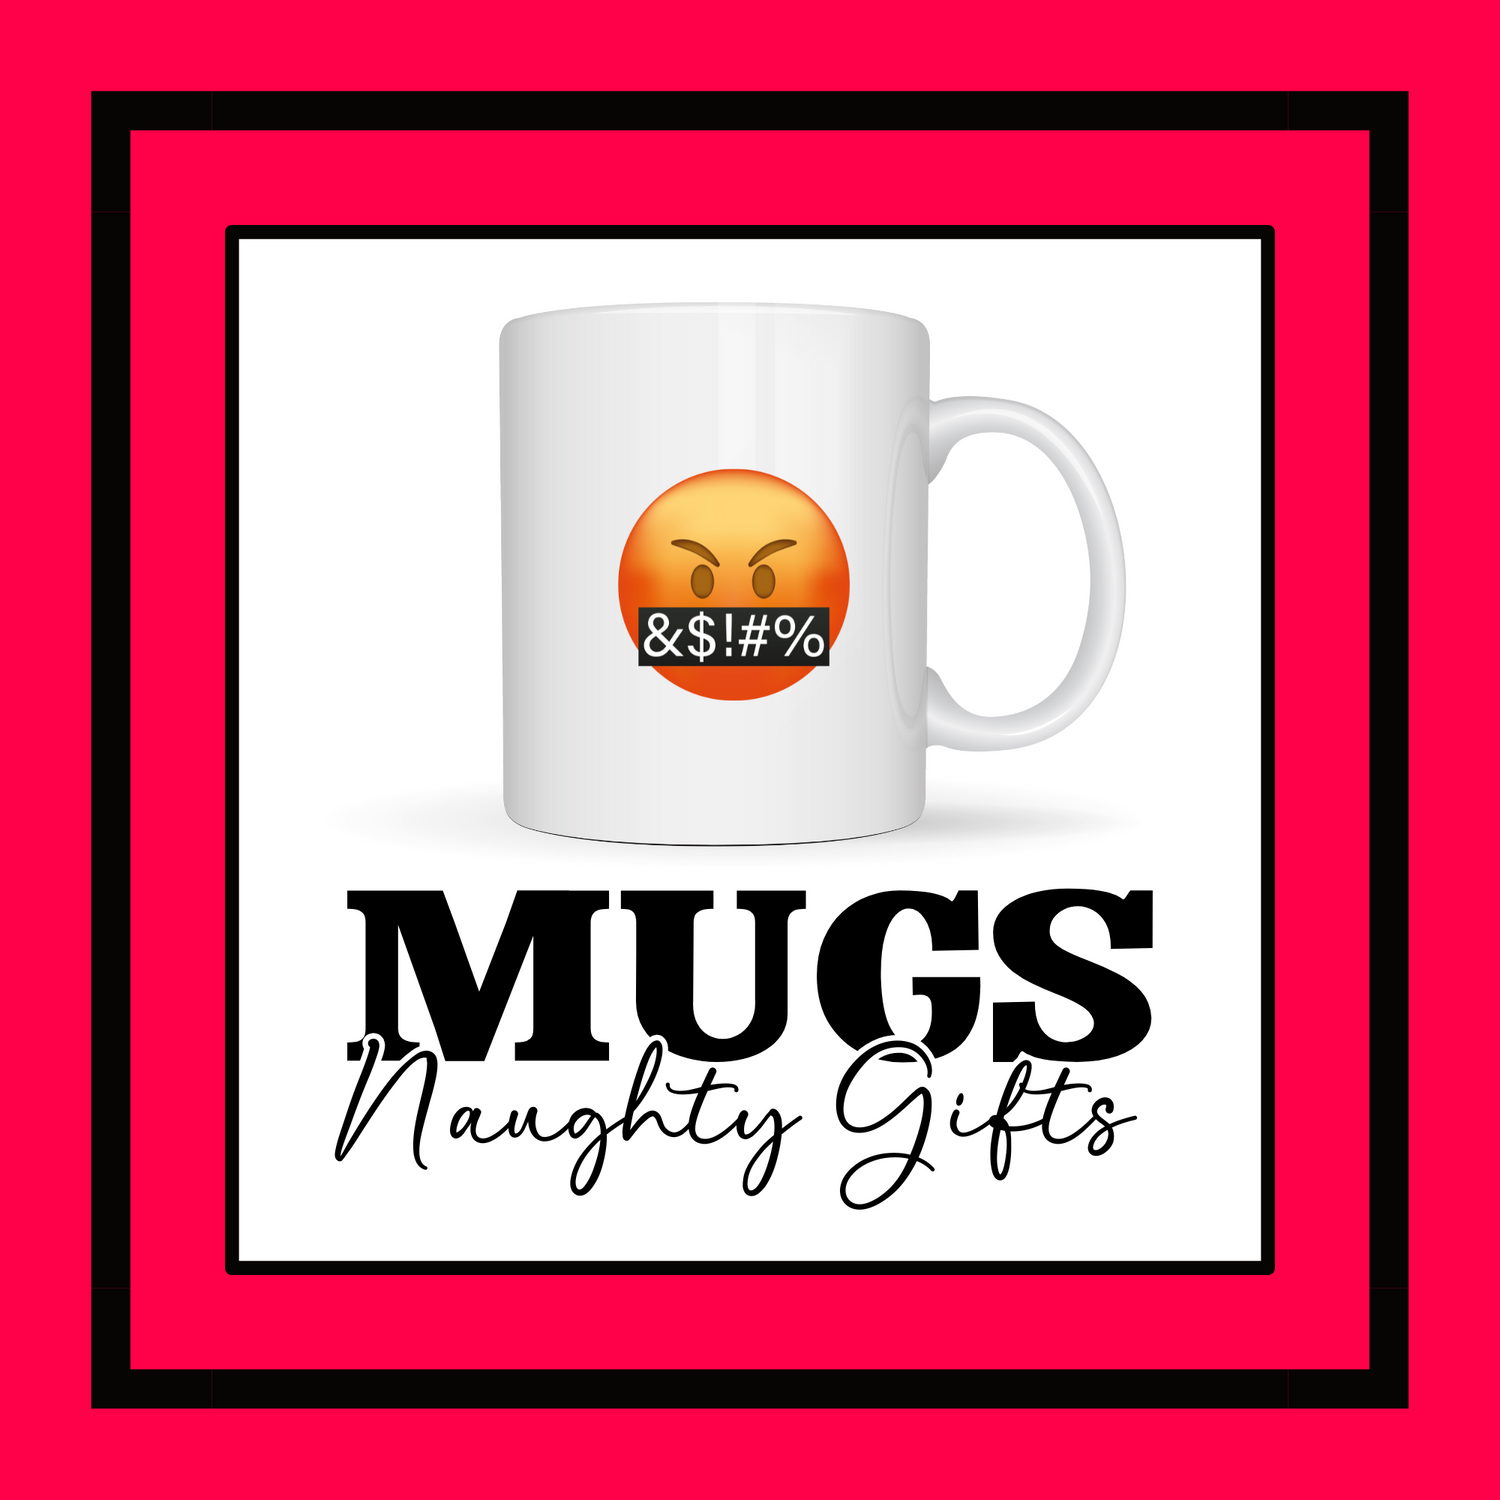 Mugs - Naughty Gifts